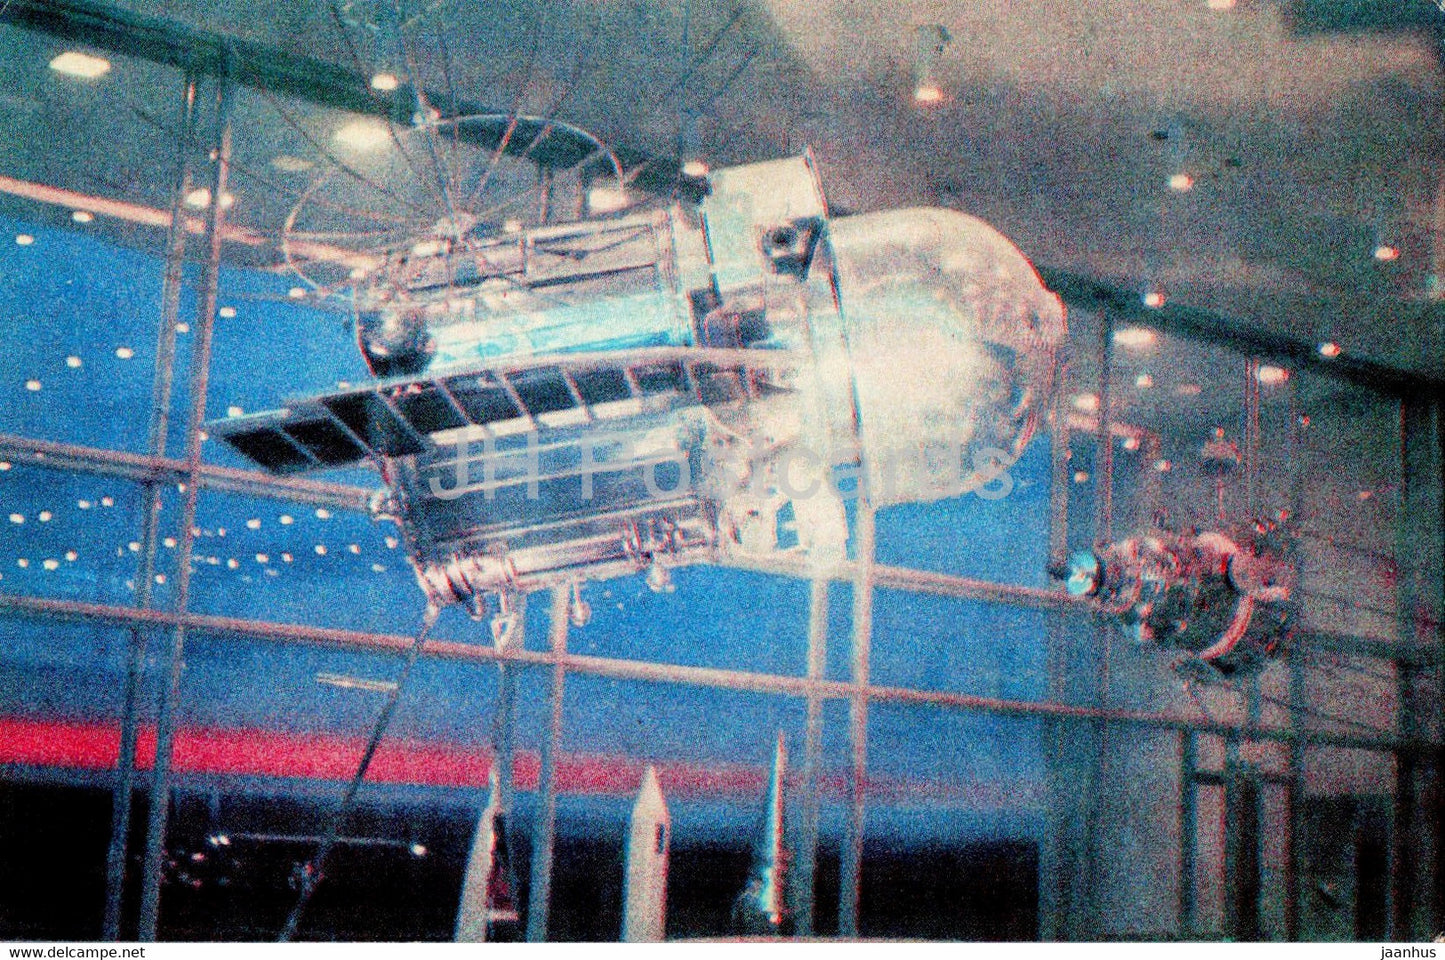 Kaluga - Tsiolkovsky State Museum of Cosmonautics Automatic Interplanetary station Venera 1 1971 - Russia USSR - unused - JH Postcards